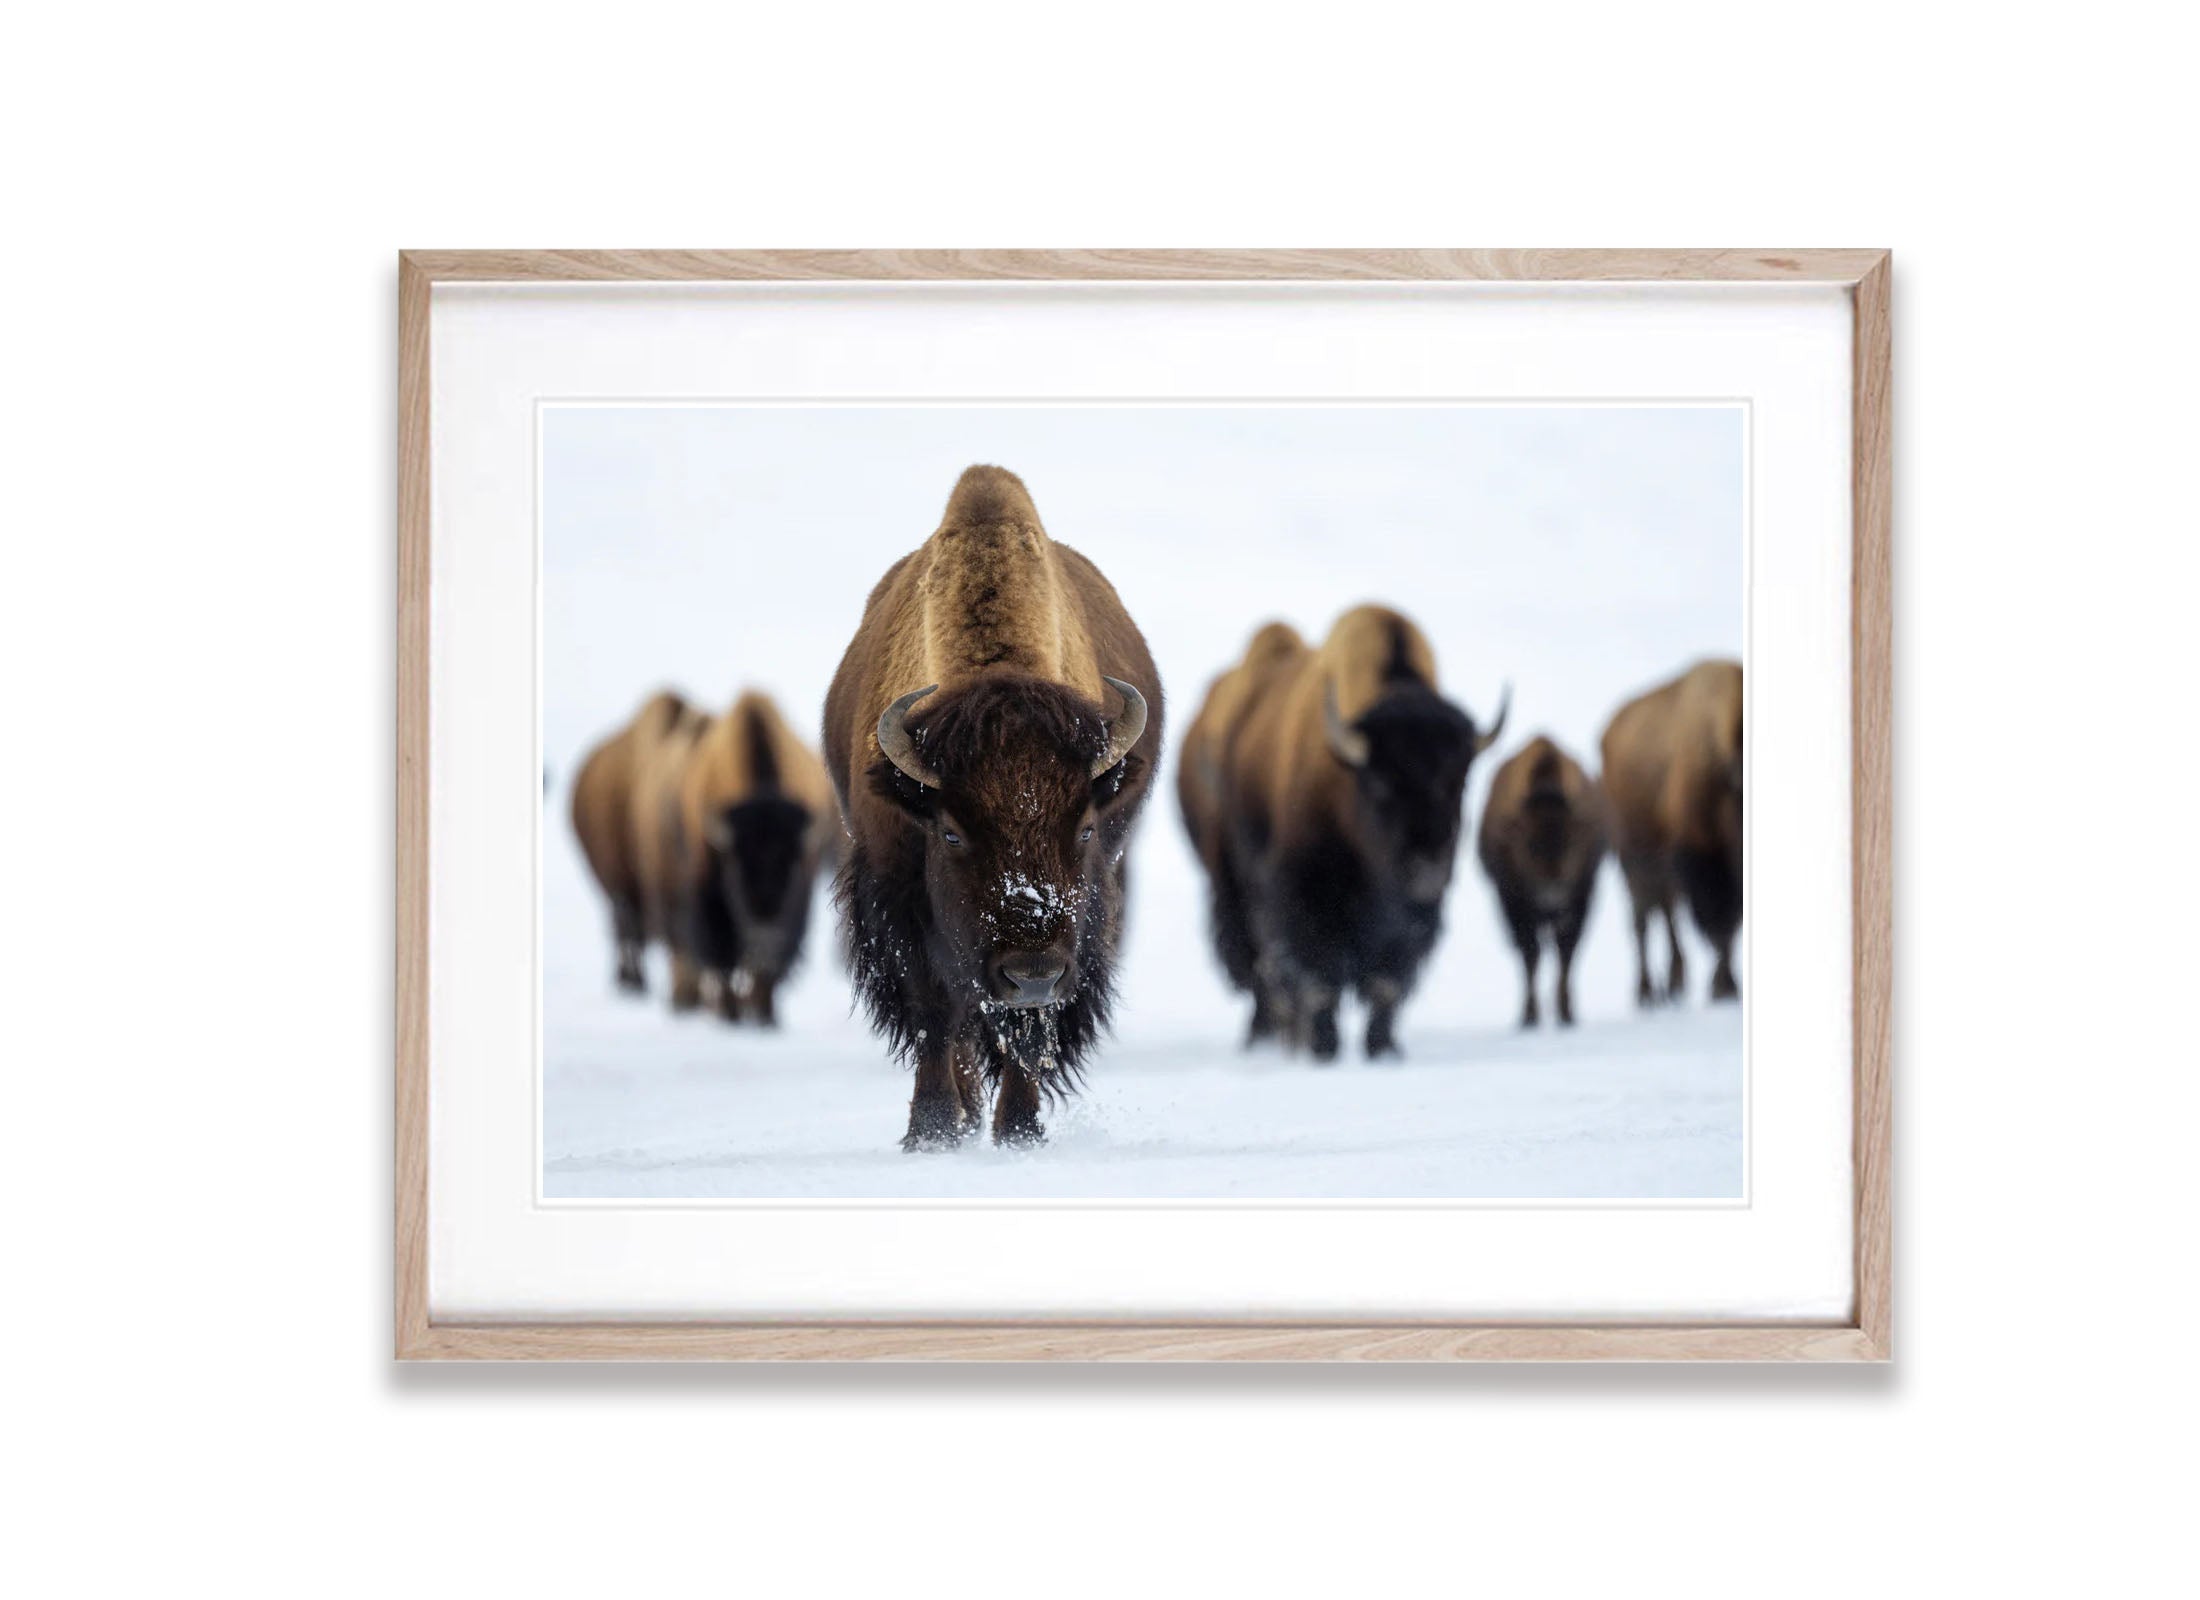 ARTWORK INSTOCK - The Bison, Yellowstone NP - 150x100cms Canvas Print Raw Oak